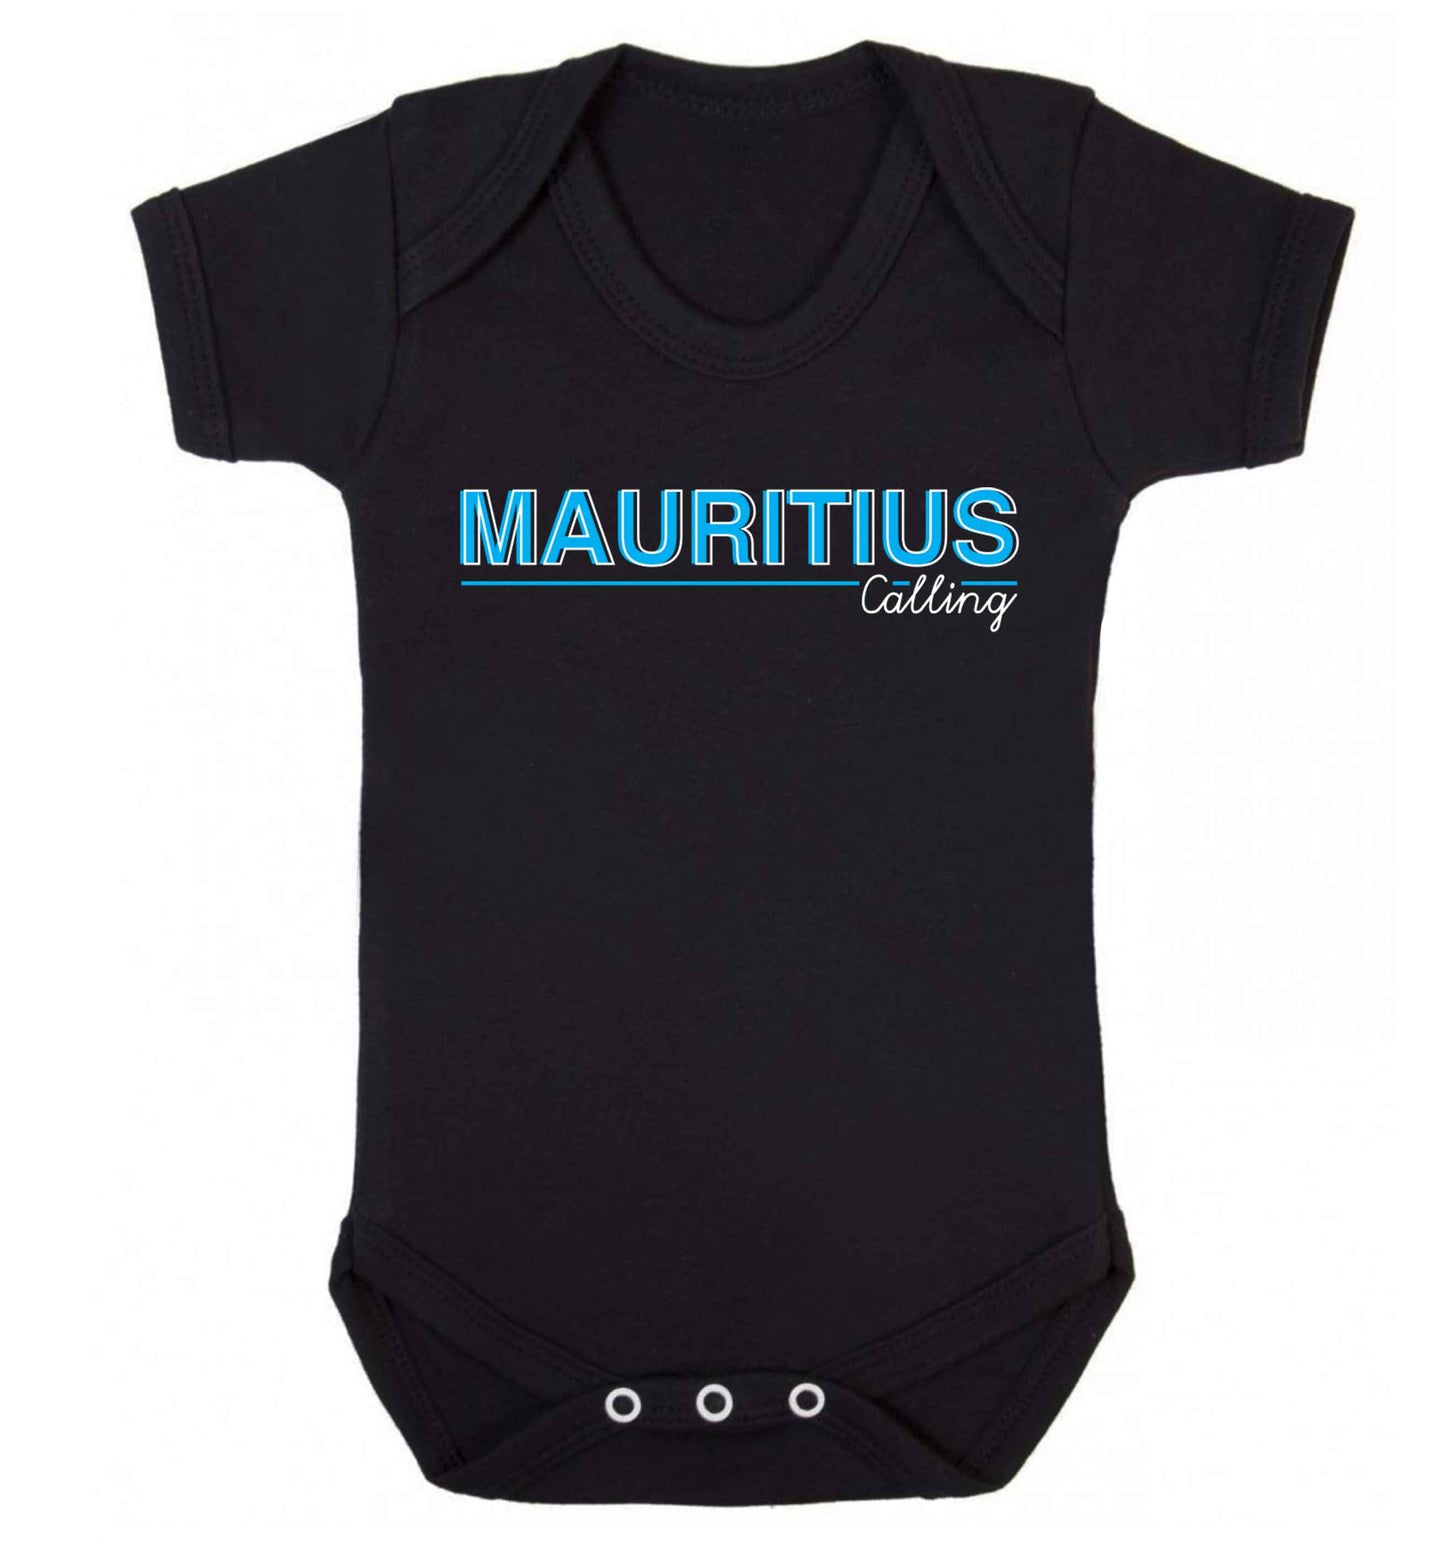 Mauritius calling Baby Vest black 18-24 months